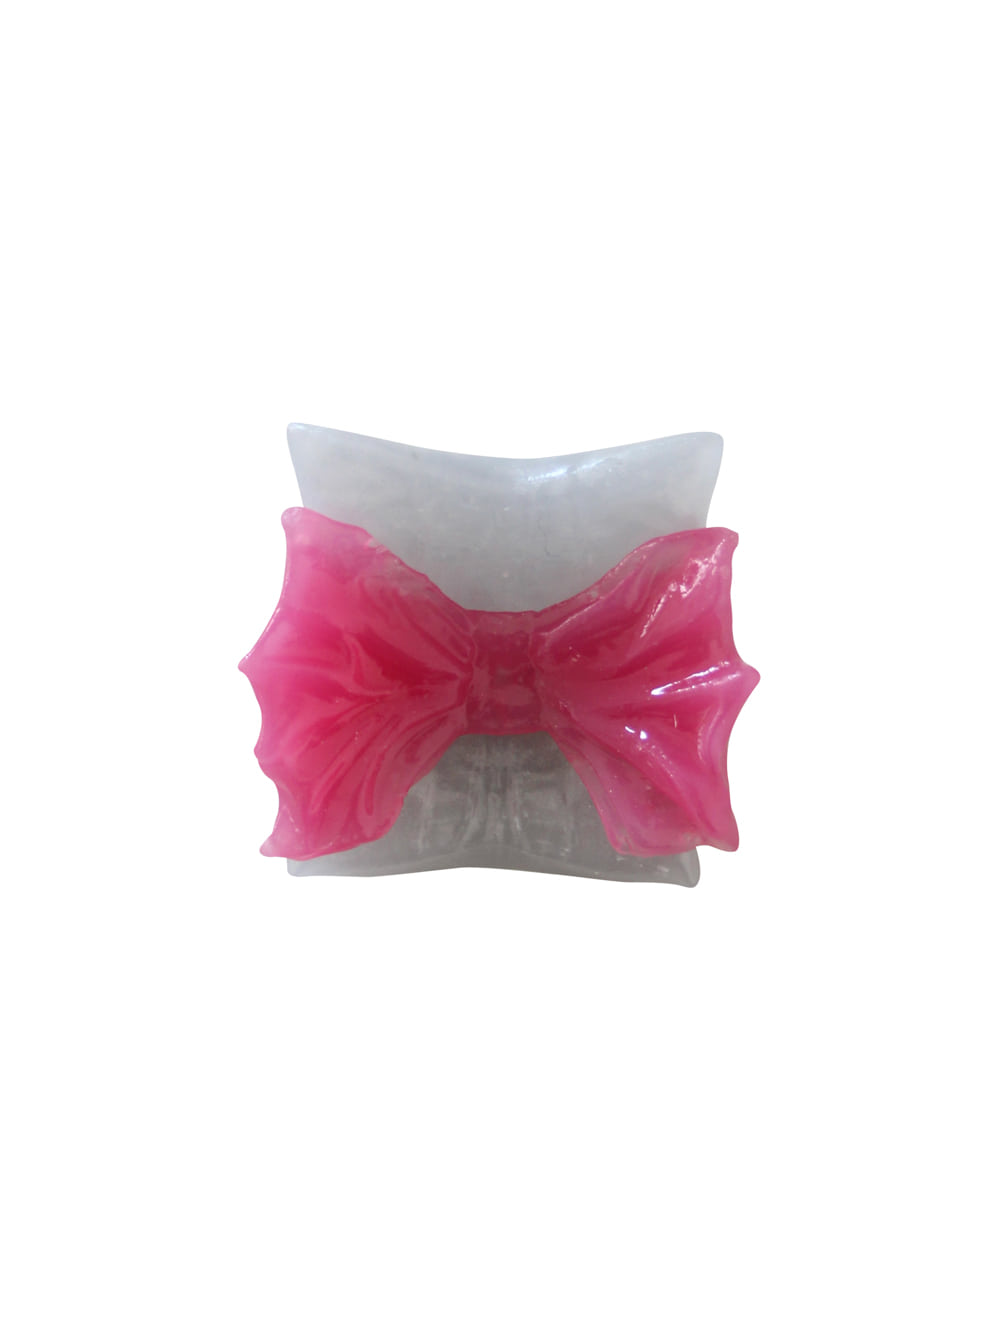 Swatch Jewel Bed 002 Ribbon - Pink